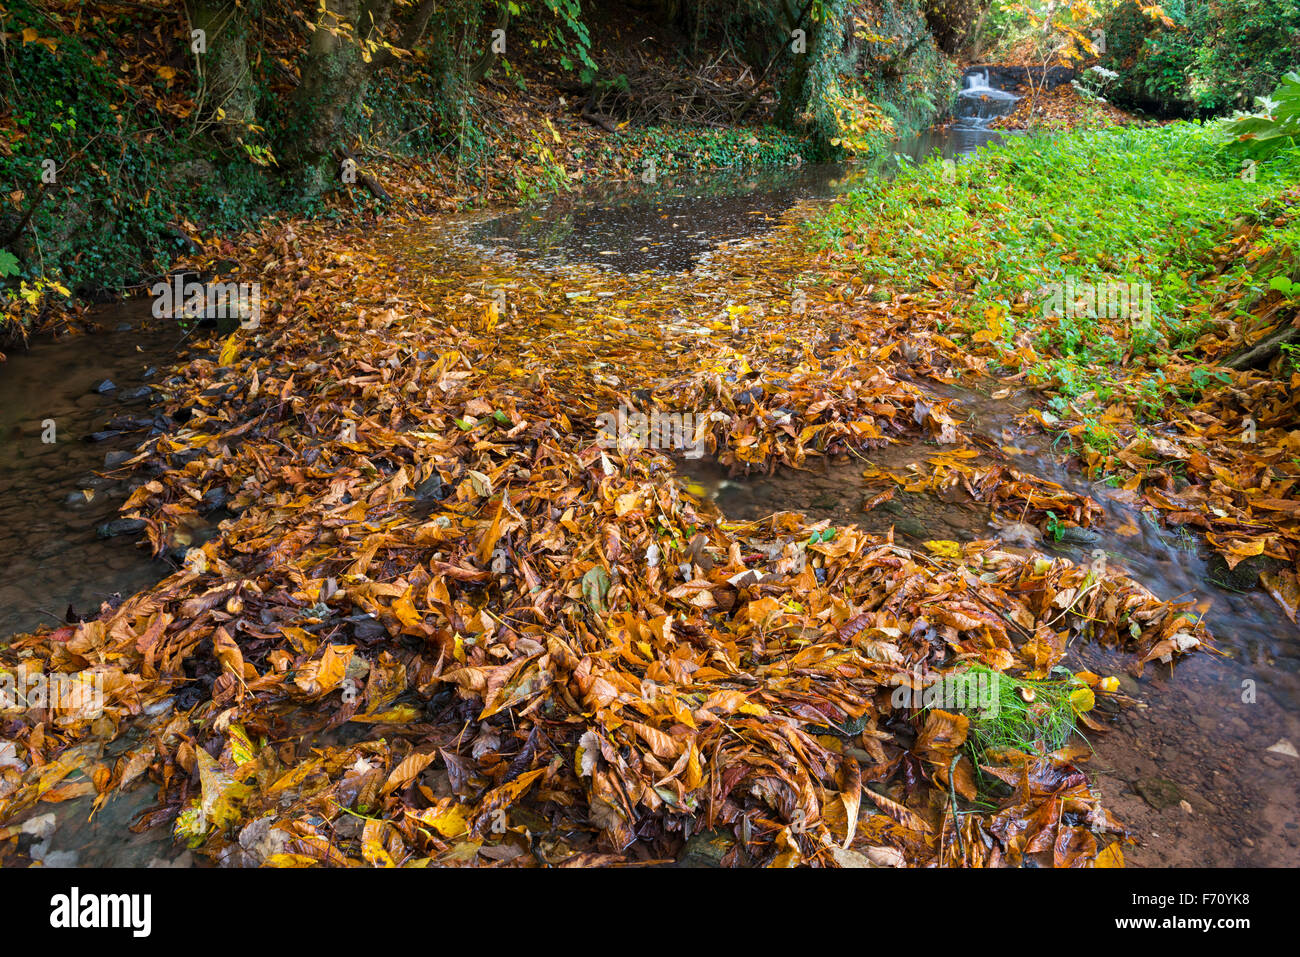 Fallen leaves blocking a stream in a Shropshire garden, England. Stock Photo